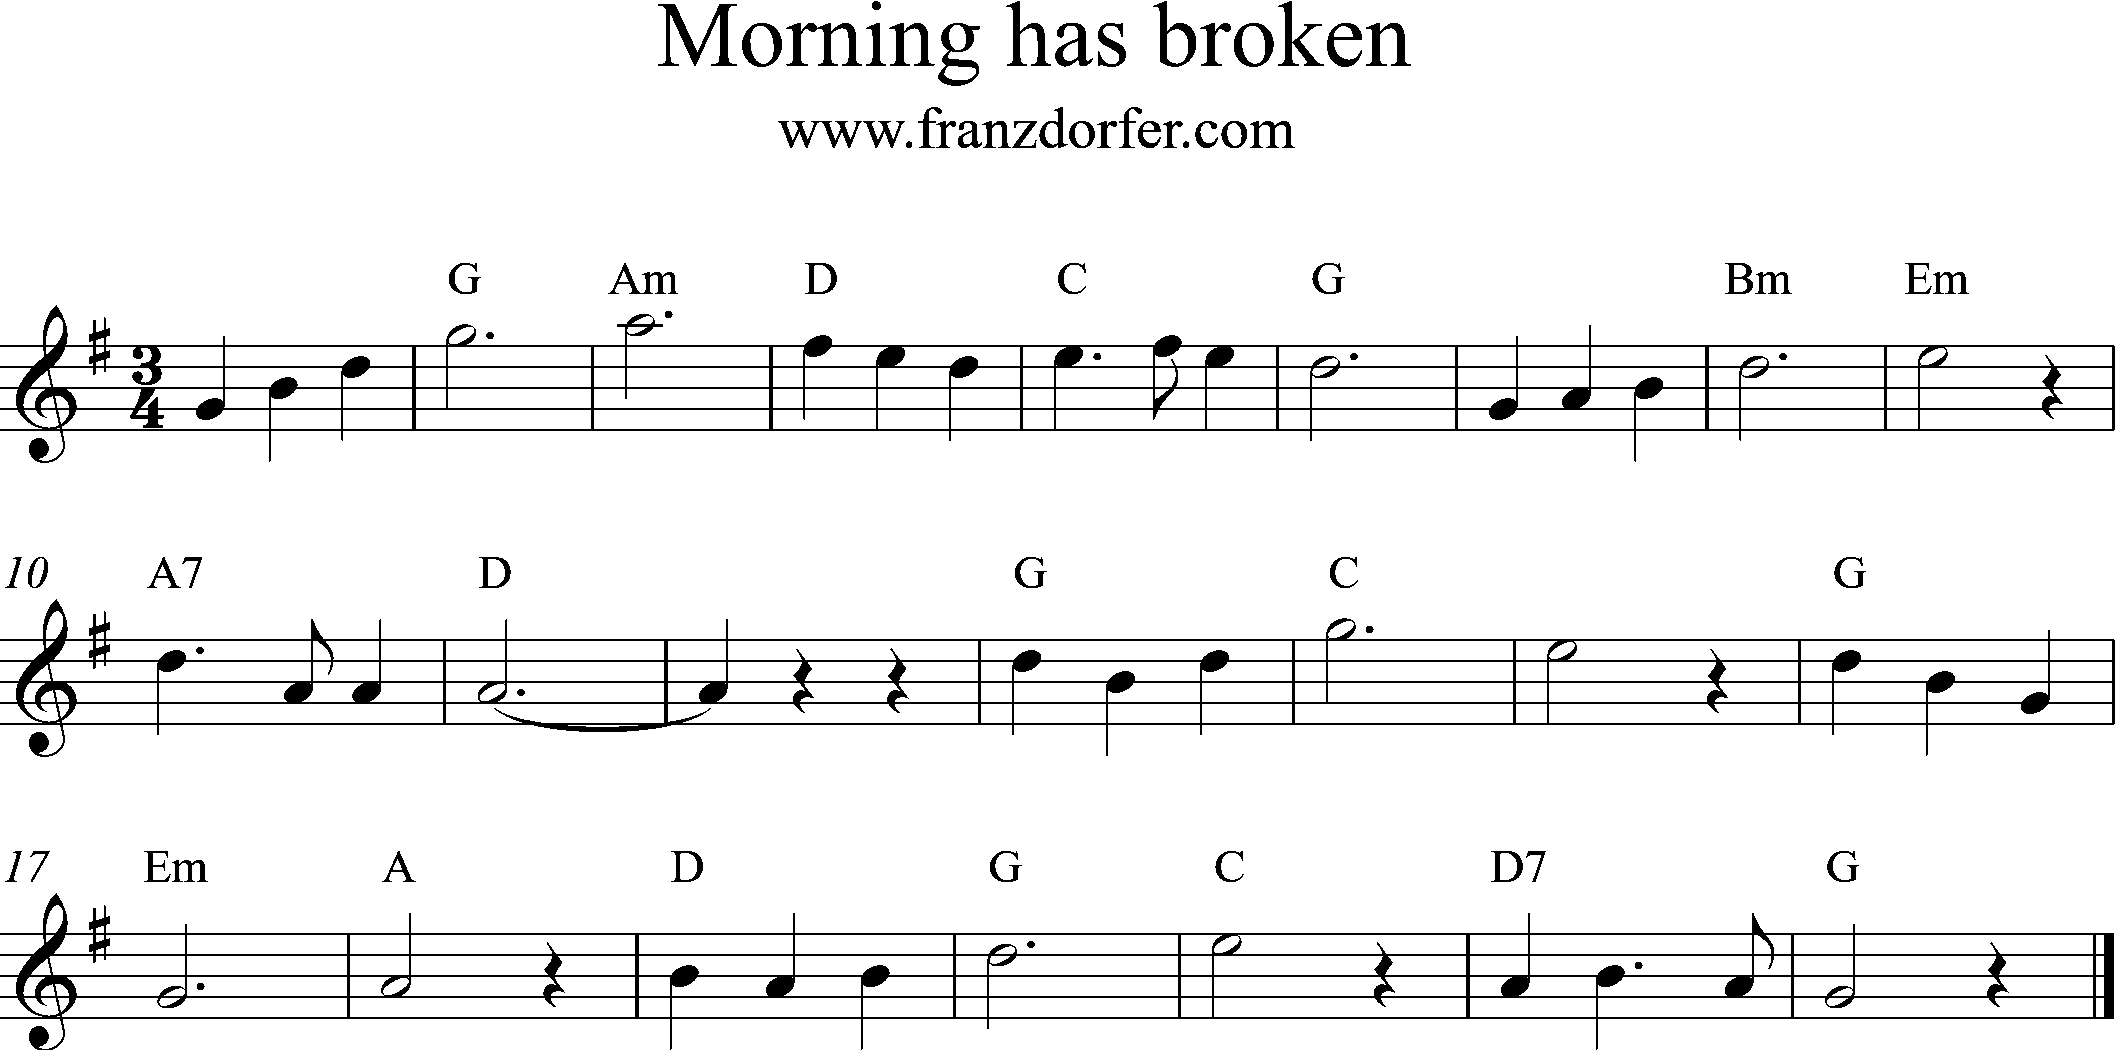 Noten für Querflöte, G-Dur, Morning has broken